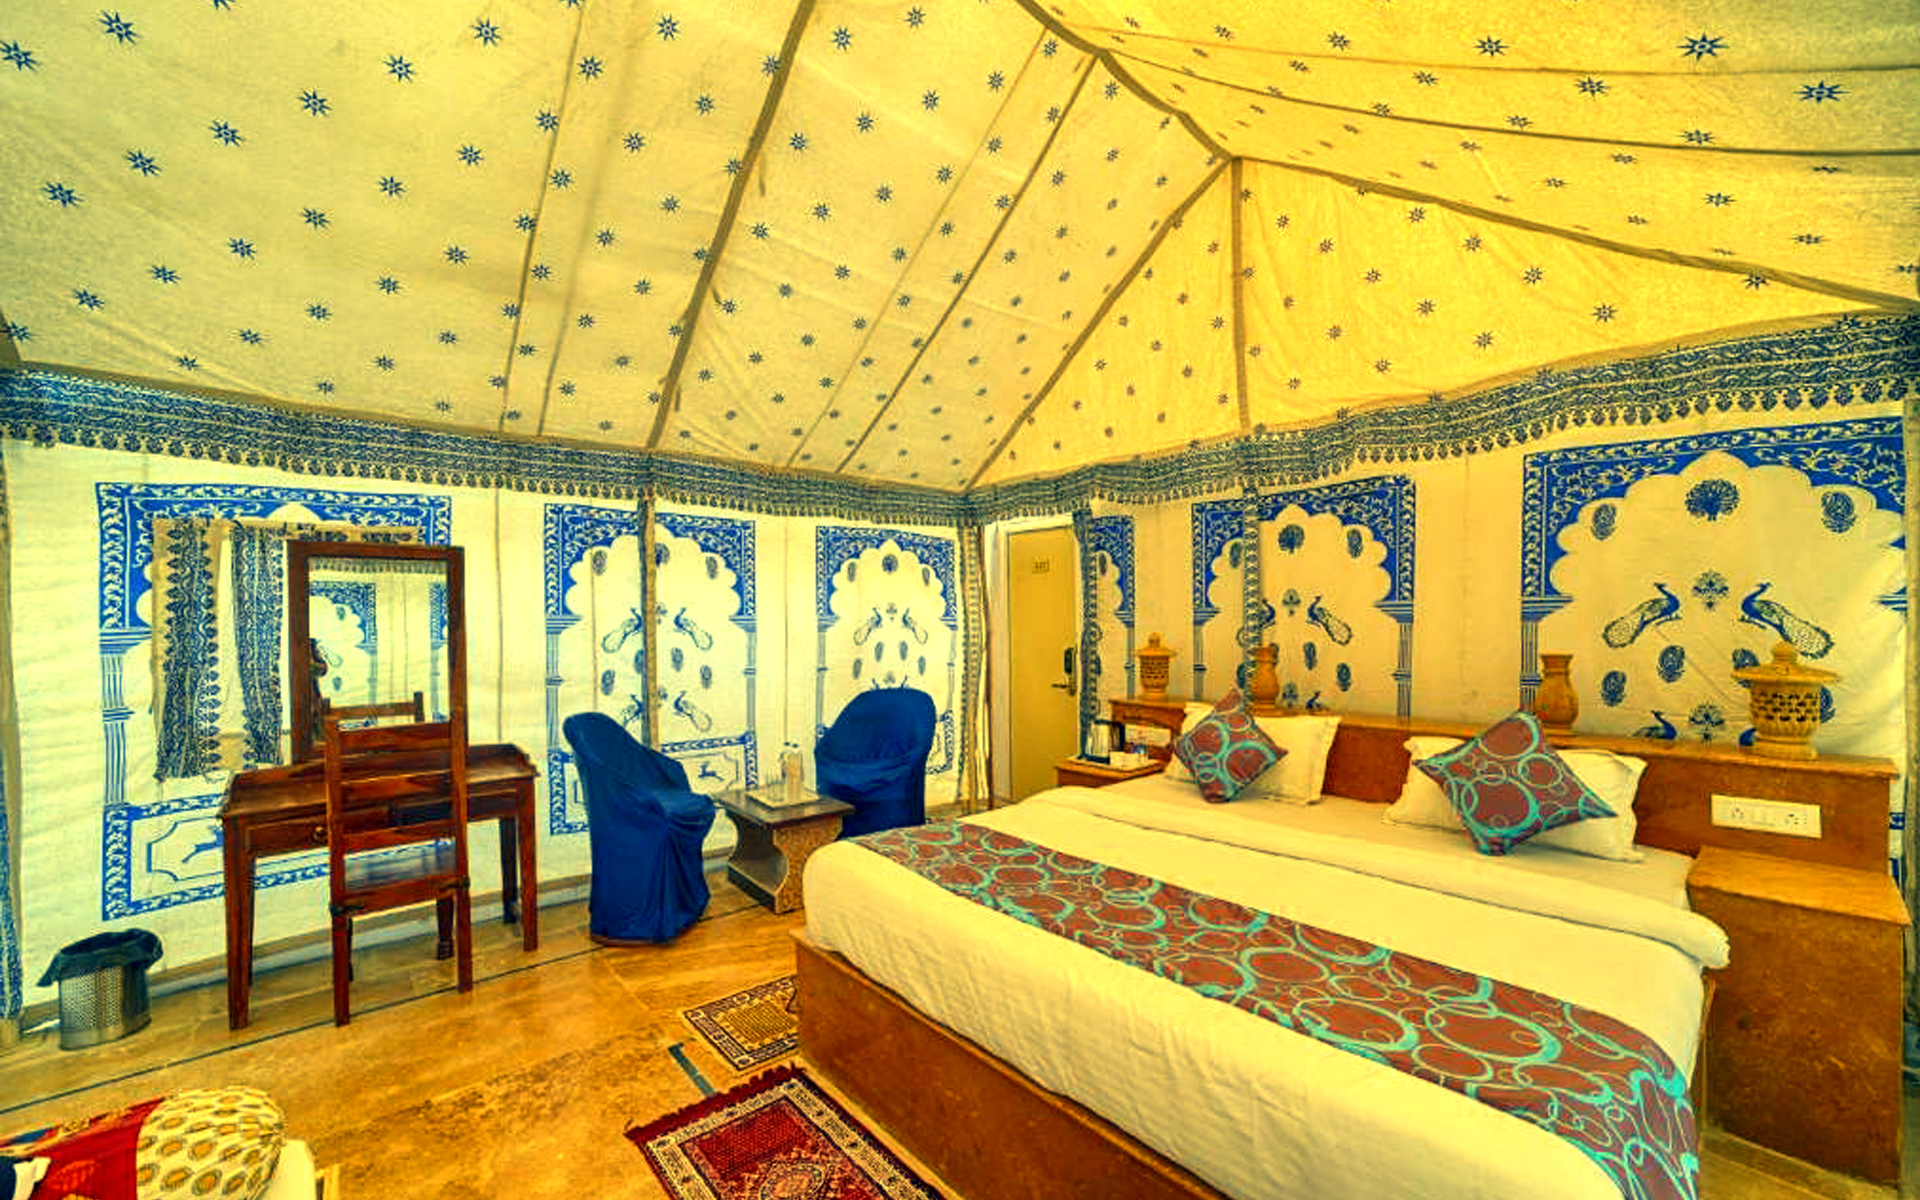 Camp In Jaisalmer